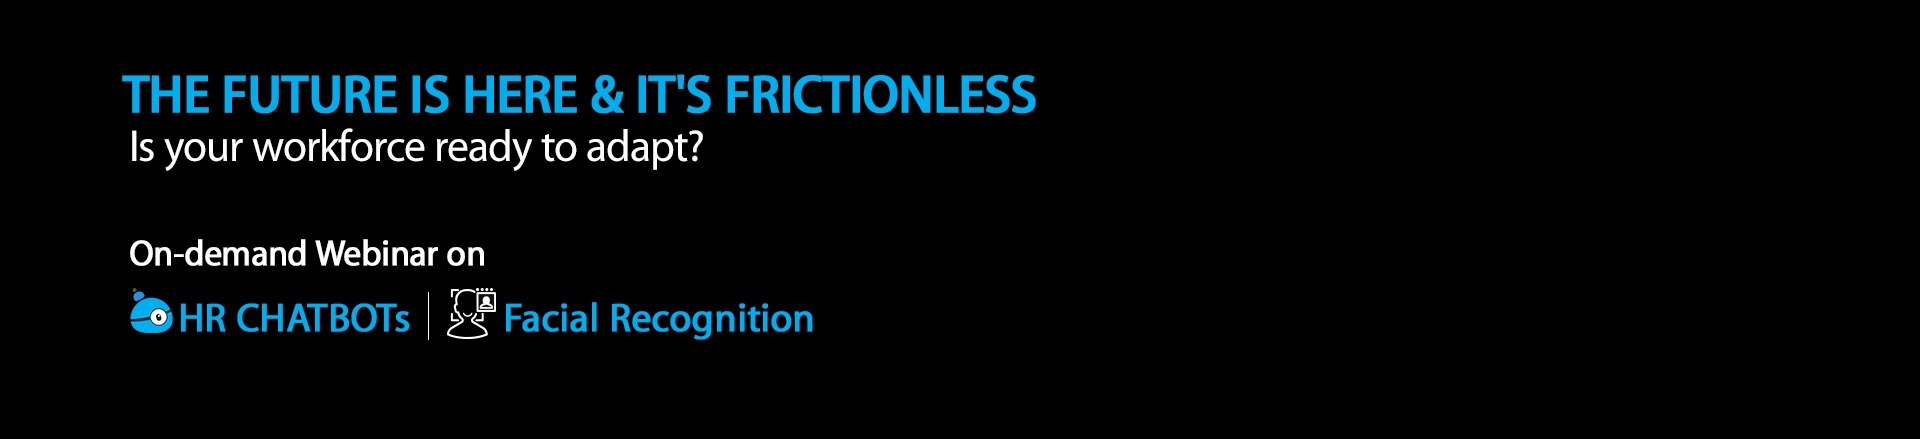 Frictionless-Computing-banner-new.jpg